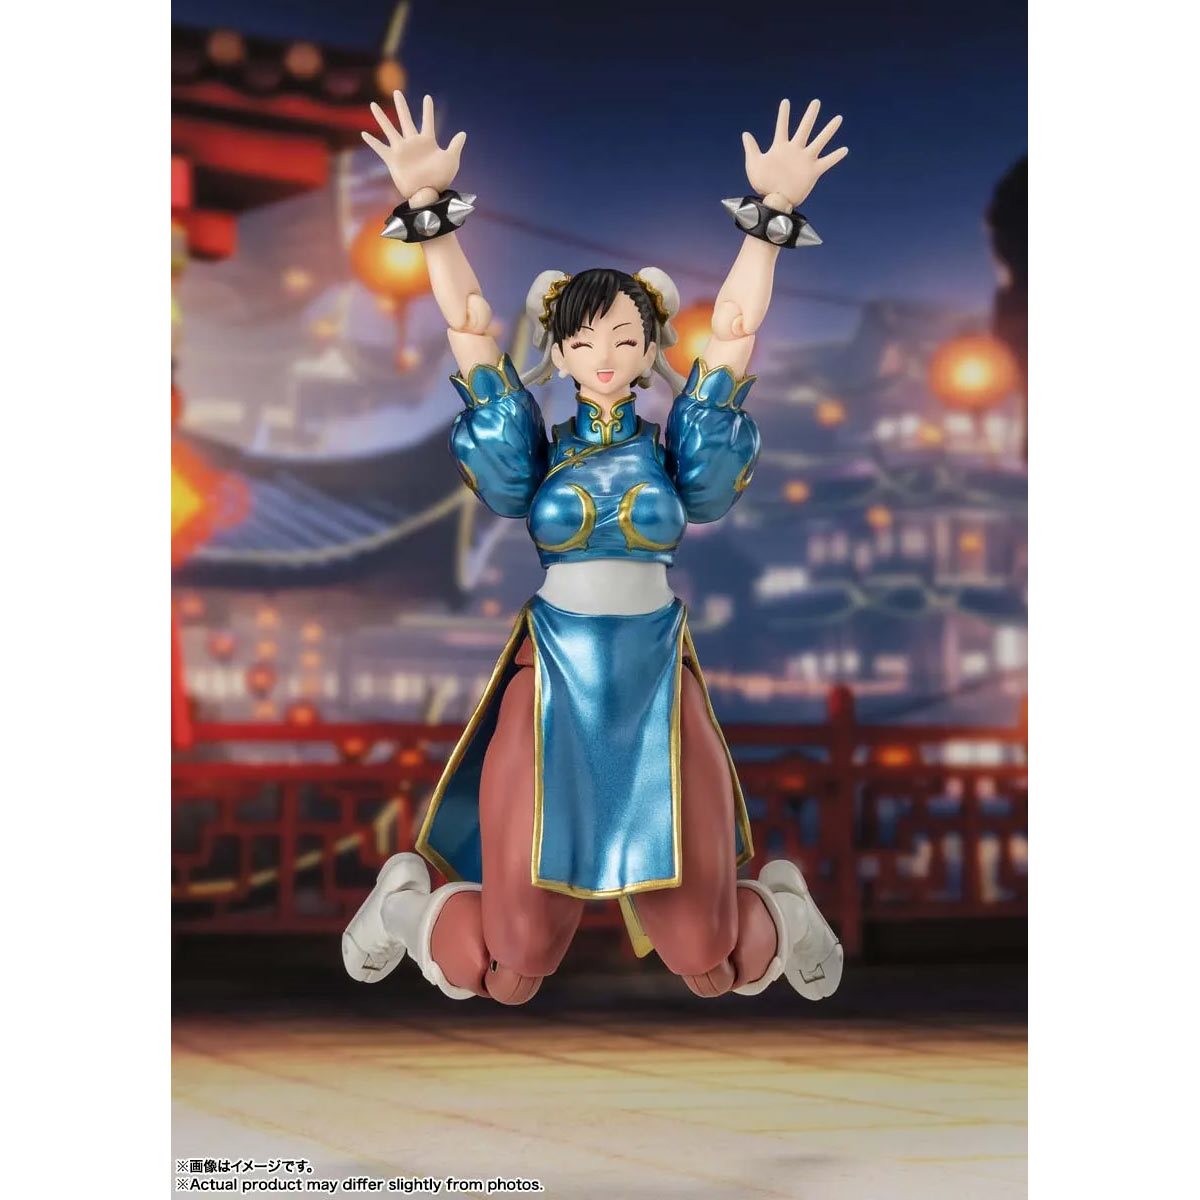 Bandai Tamashii Nations SH Figuarts: Street Fighter 6 - Chun Li Outfit 2 Figura De Accion